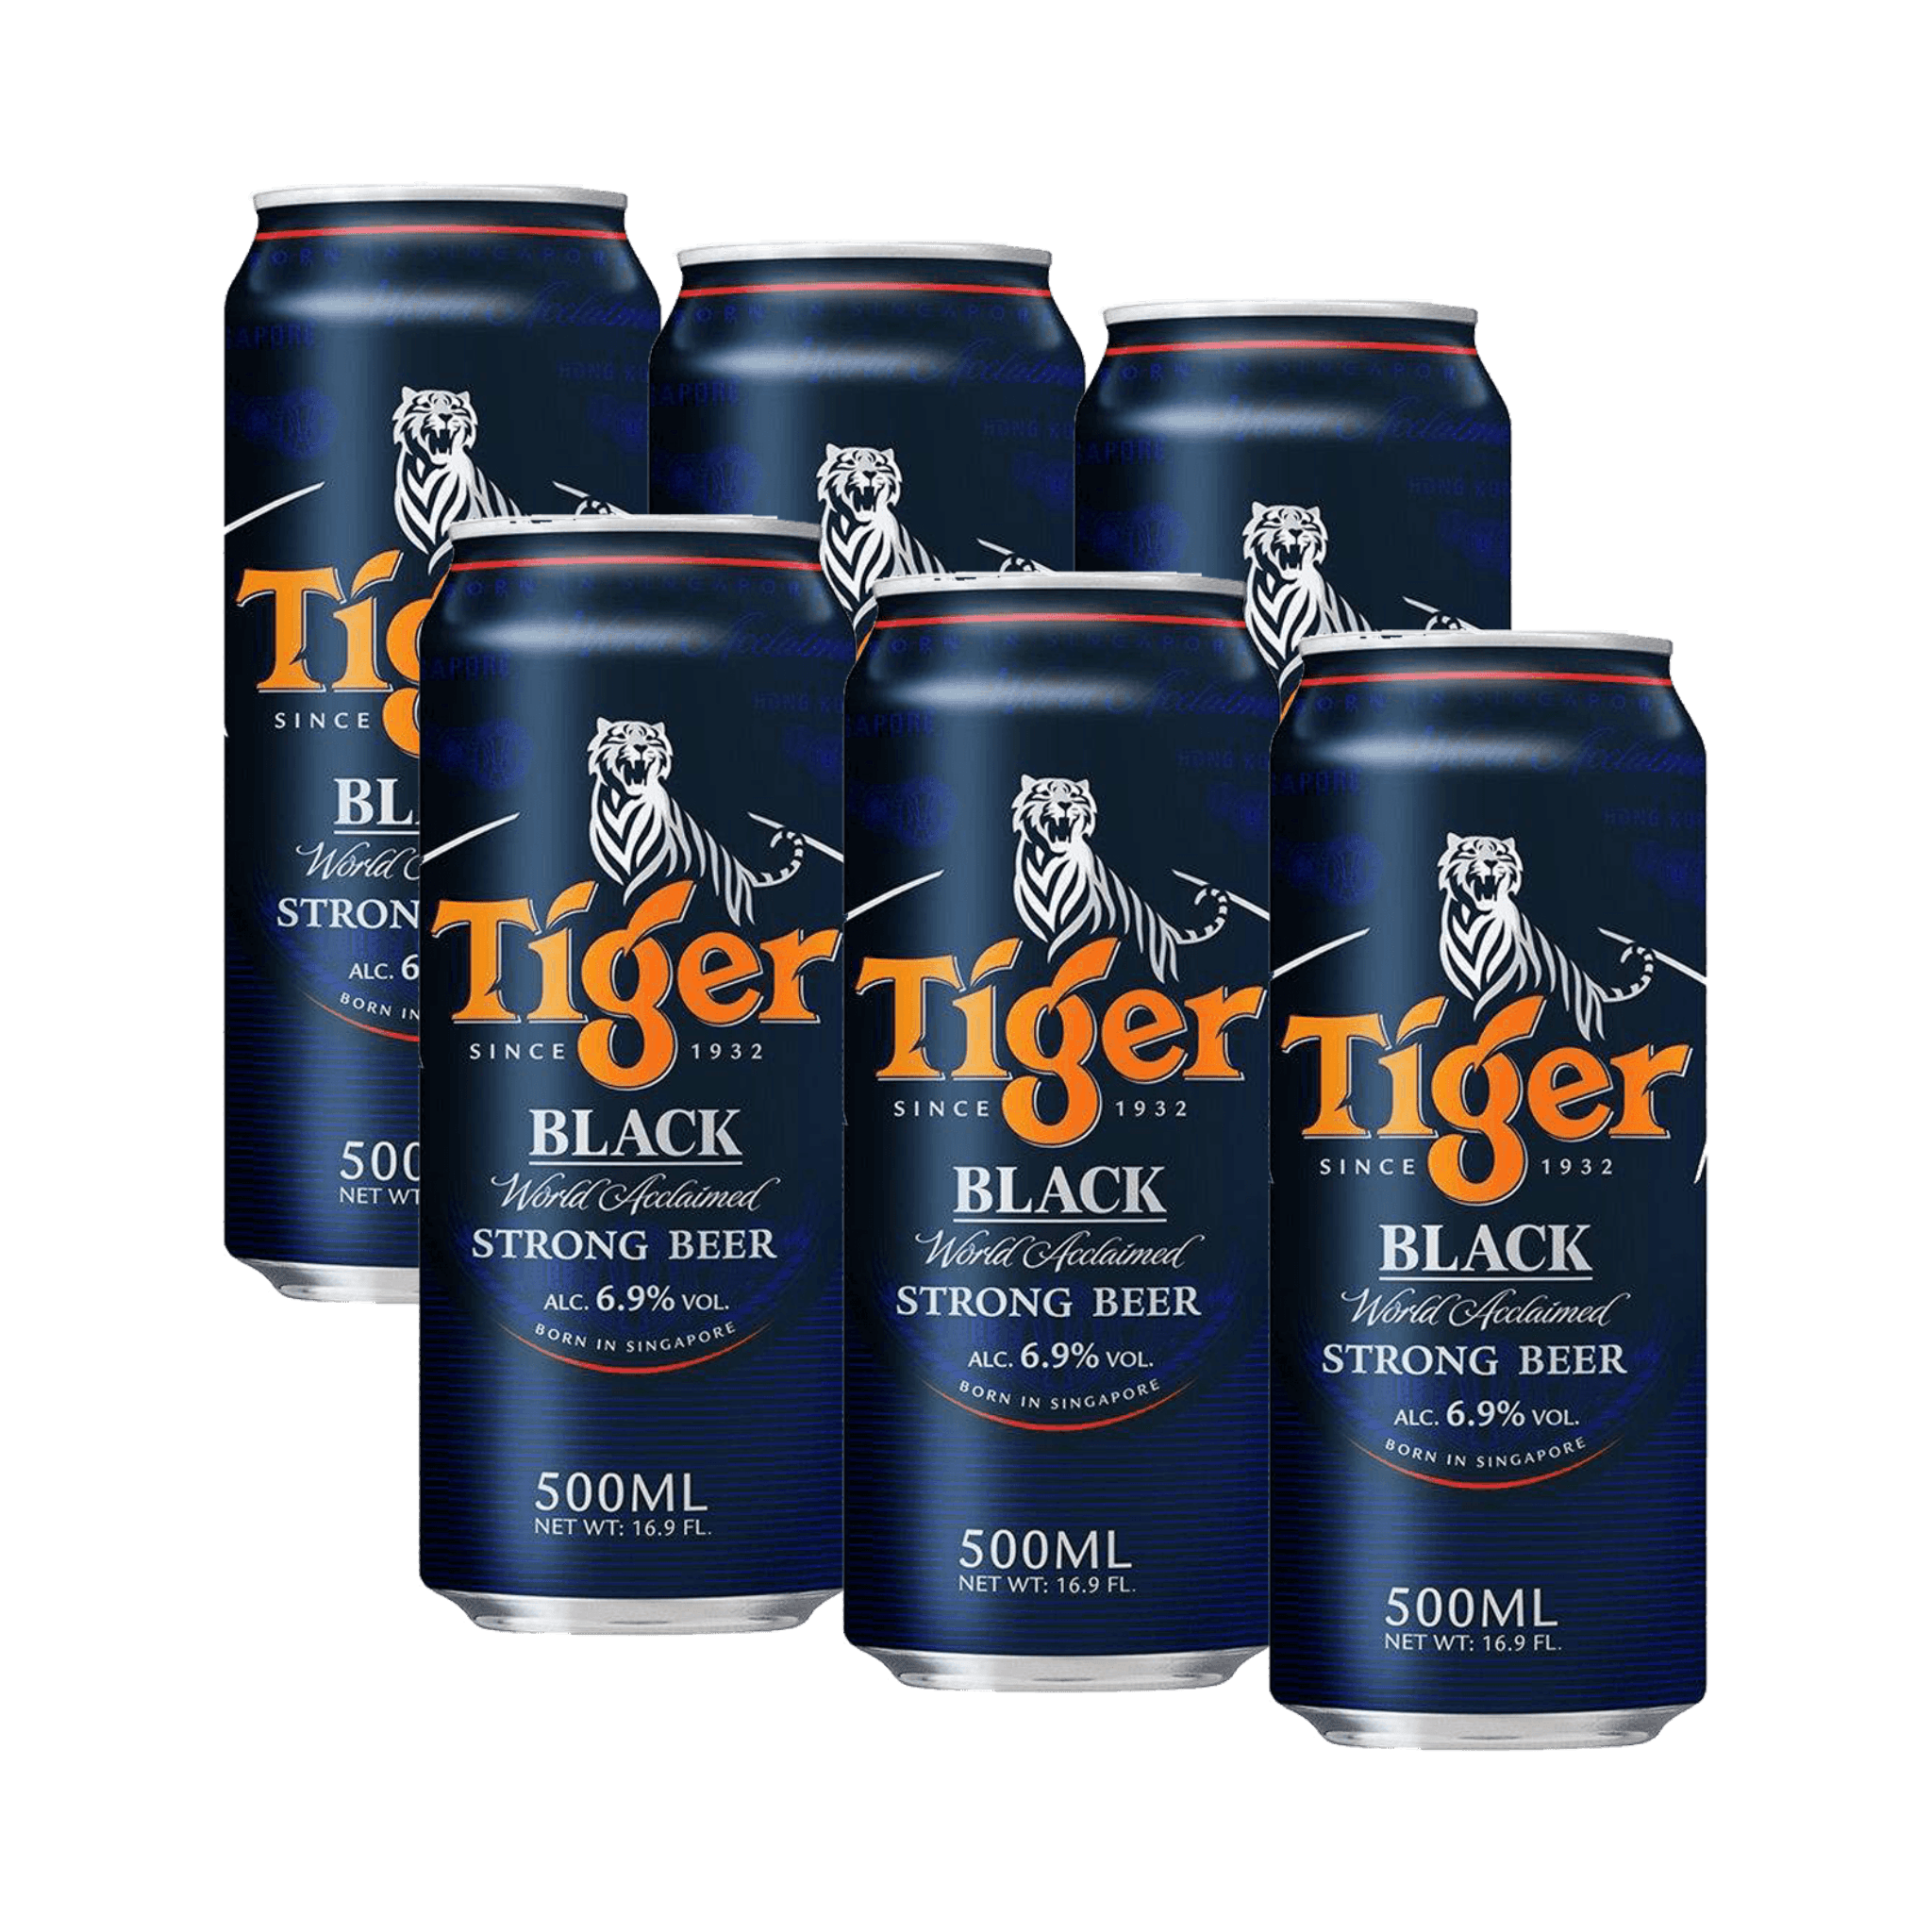 Tiger Black Can 500ml Bundle of 6 at ₱414.00